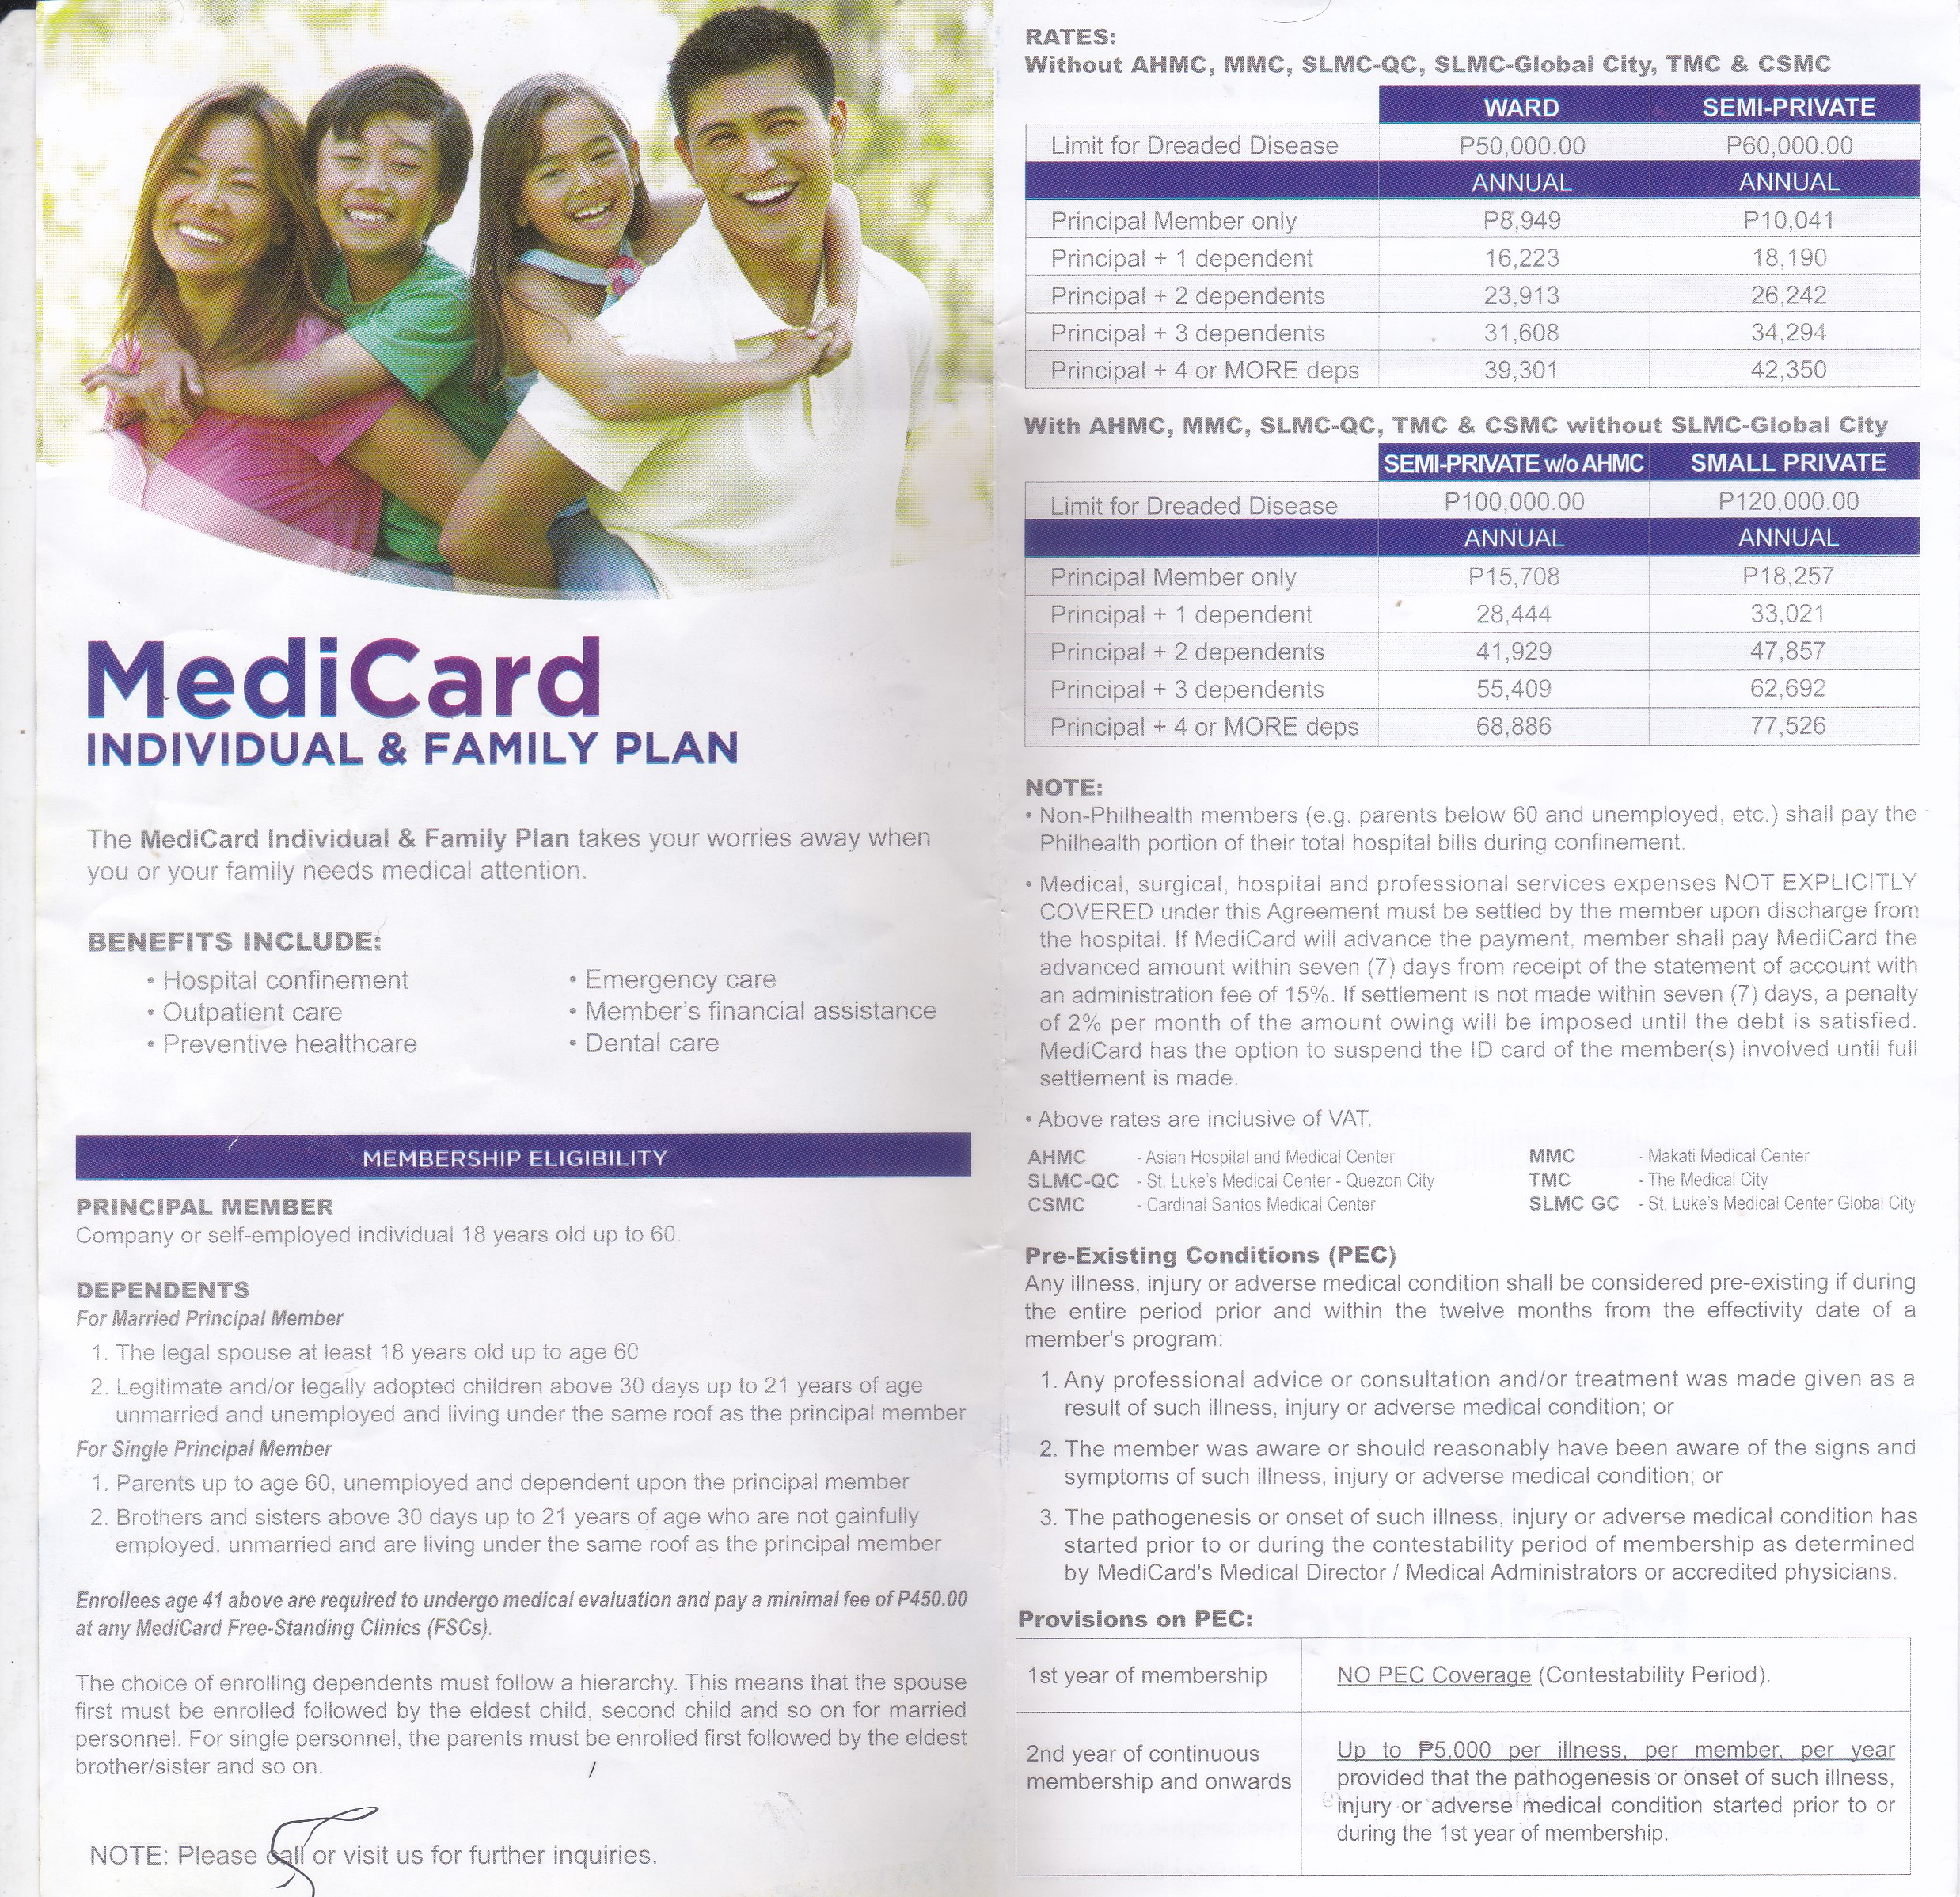 MEDICARD HMO CARD PHILIPPINES PRICE RATES